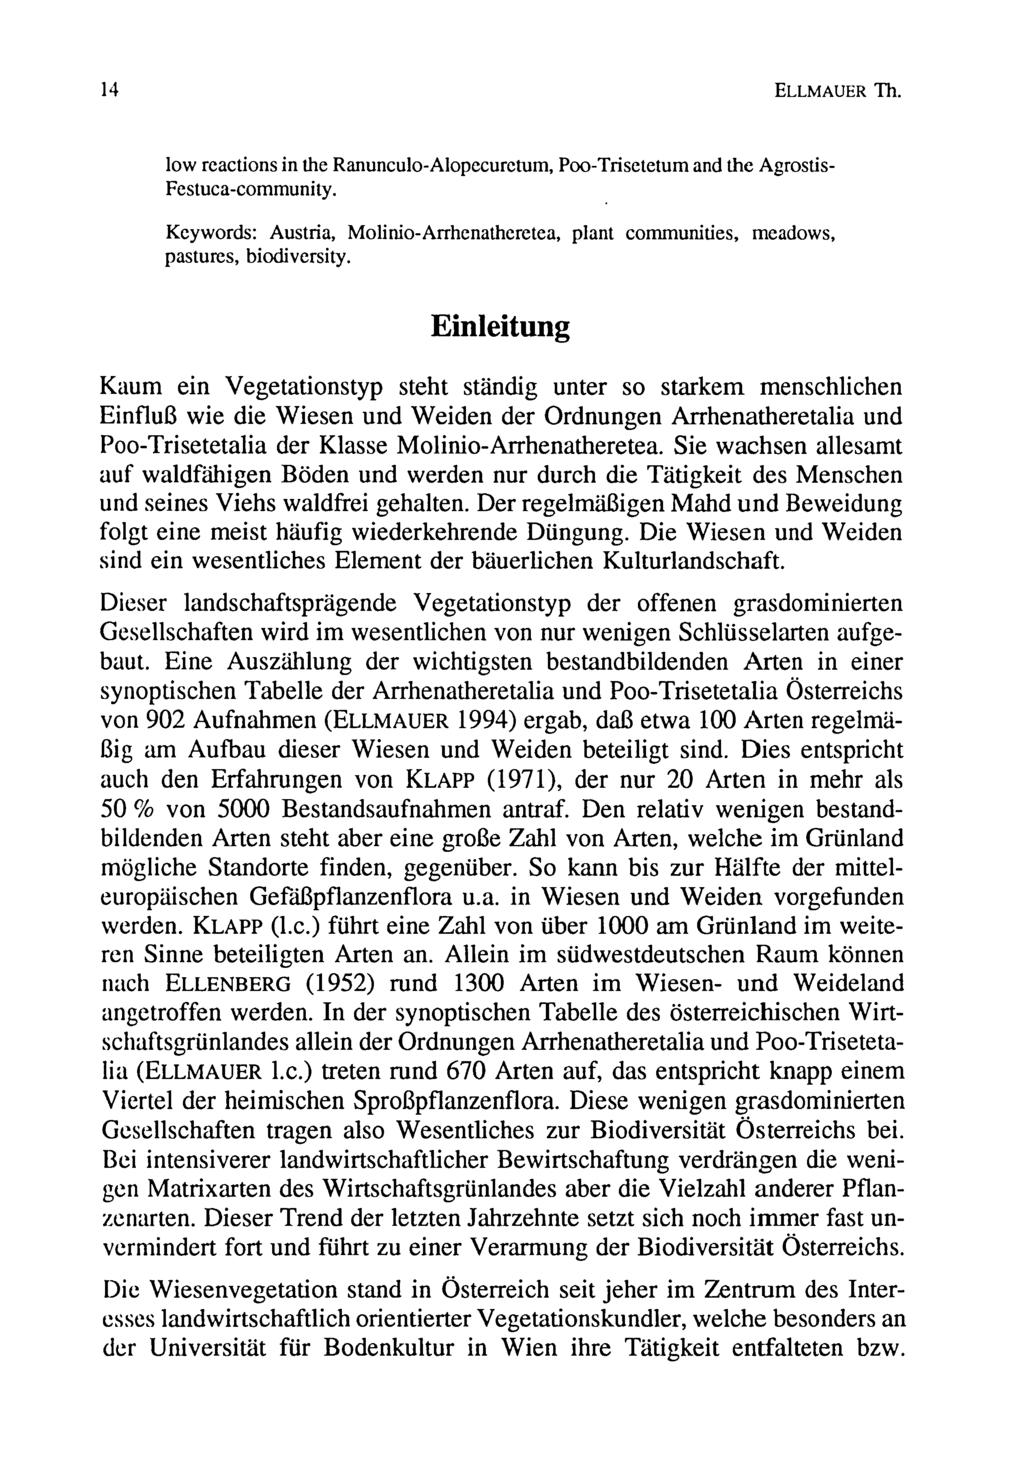 Zool.Bot. Ges. Österreich, Austria; download unter www.biologiezentrum.at 14 ELLMAUER Th. low reactions in the RanunculoAlopecurctum, PooTrisetetum and the Agrostis Festucacommunity.